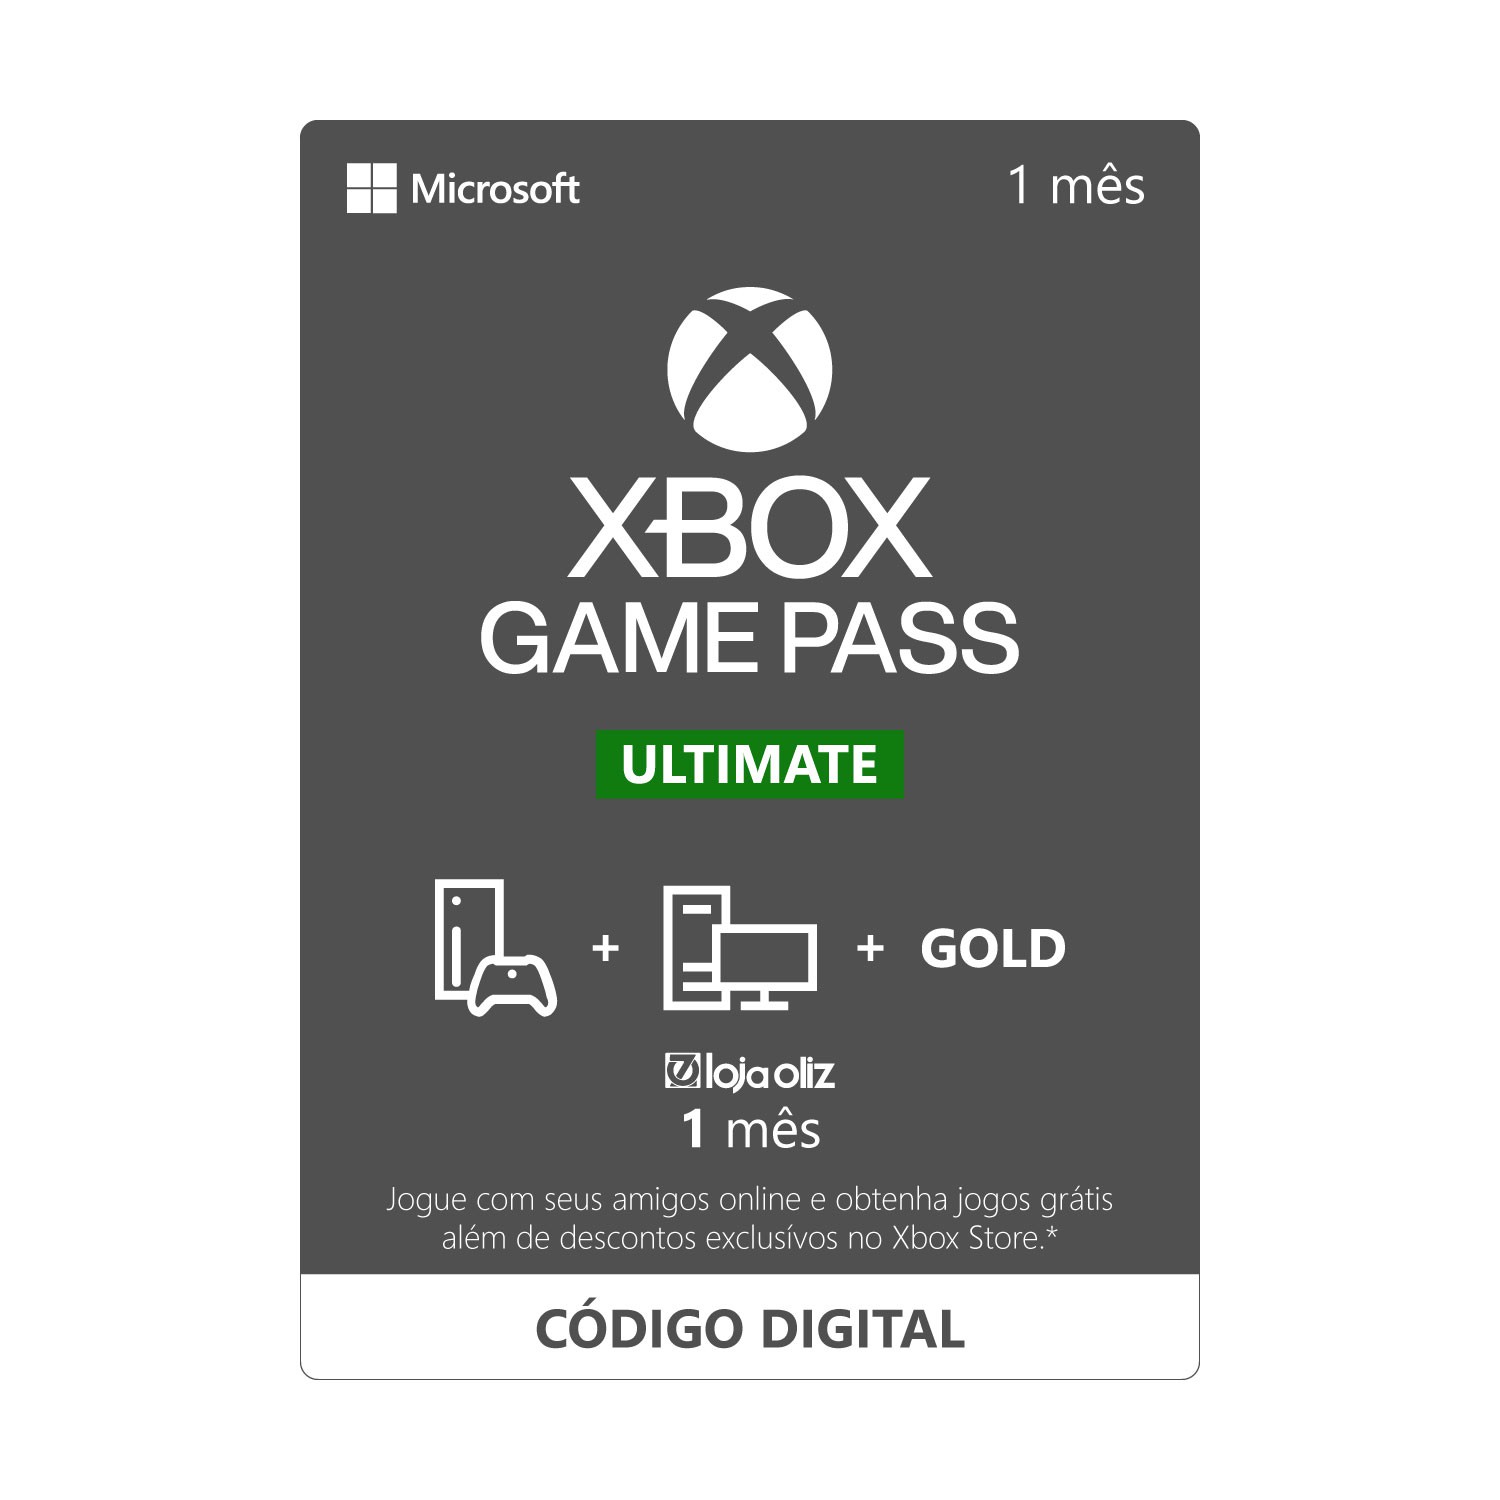 Xbox Live Gold + Game Pass Ultimate Código 9 Meses